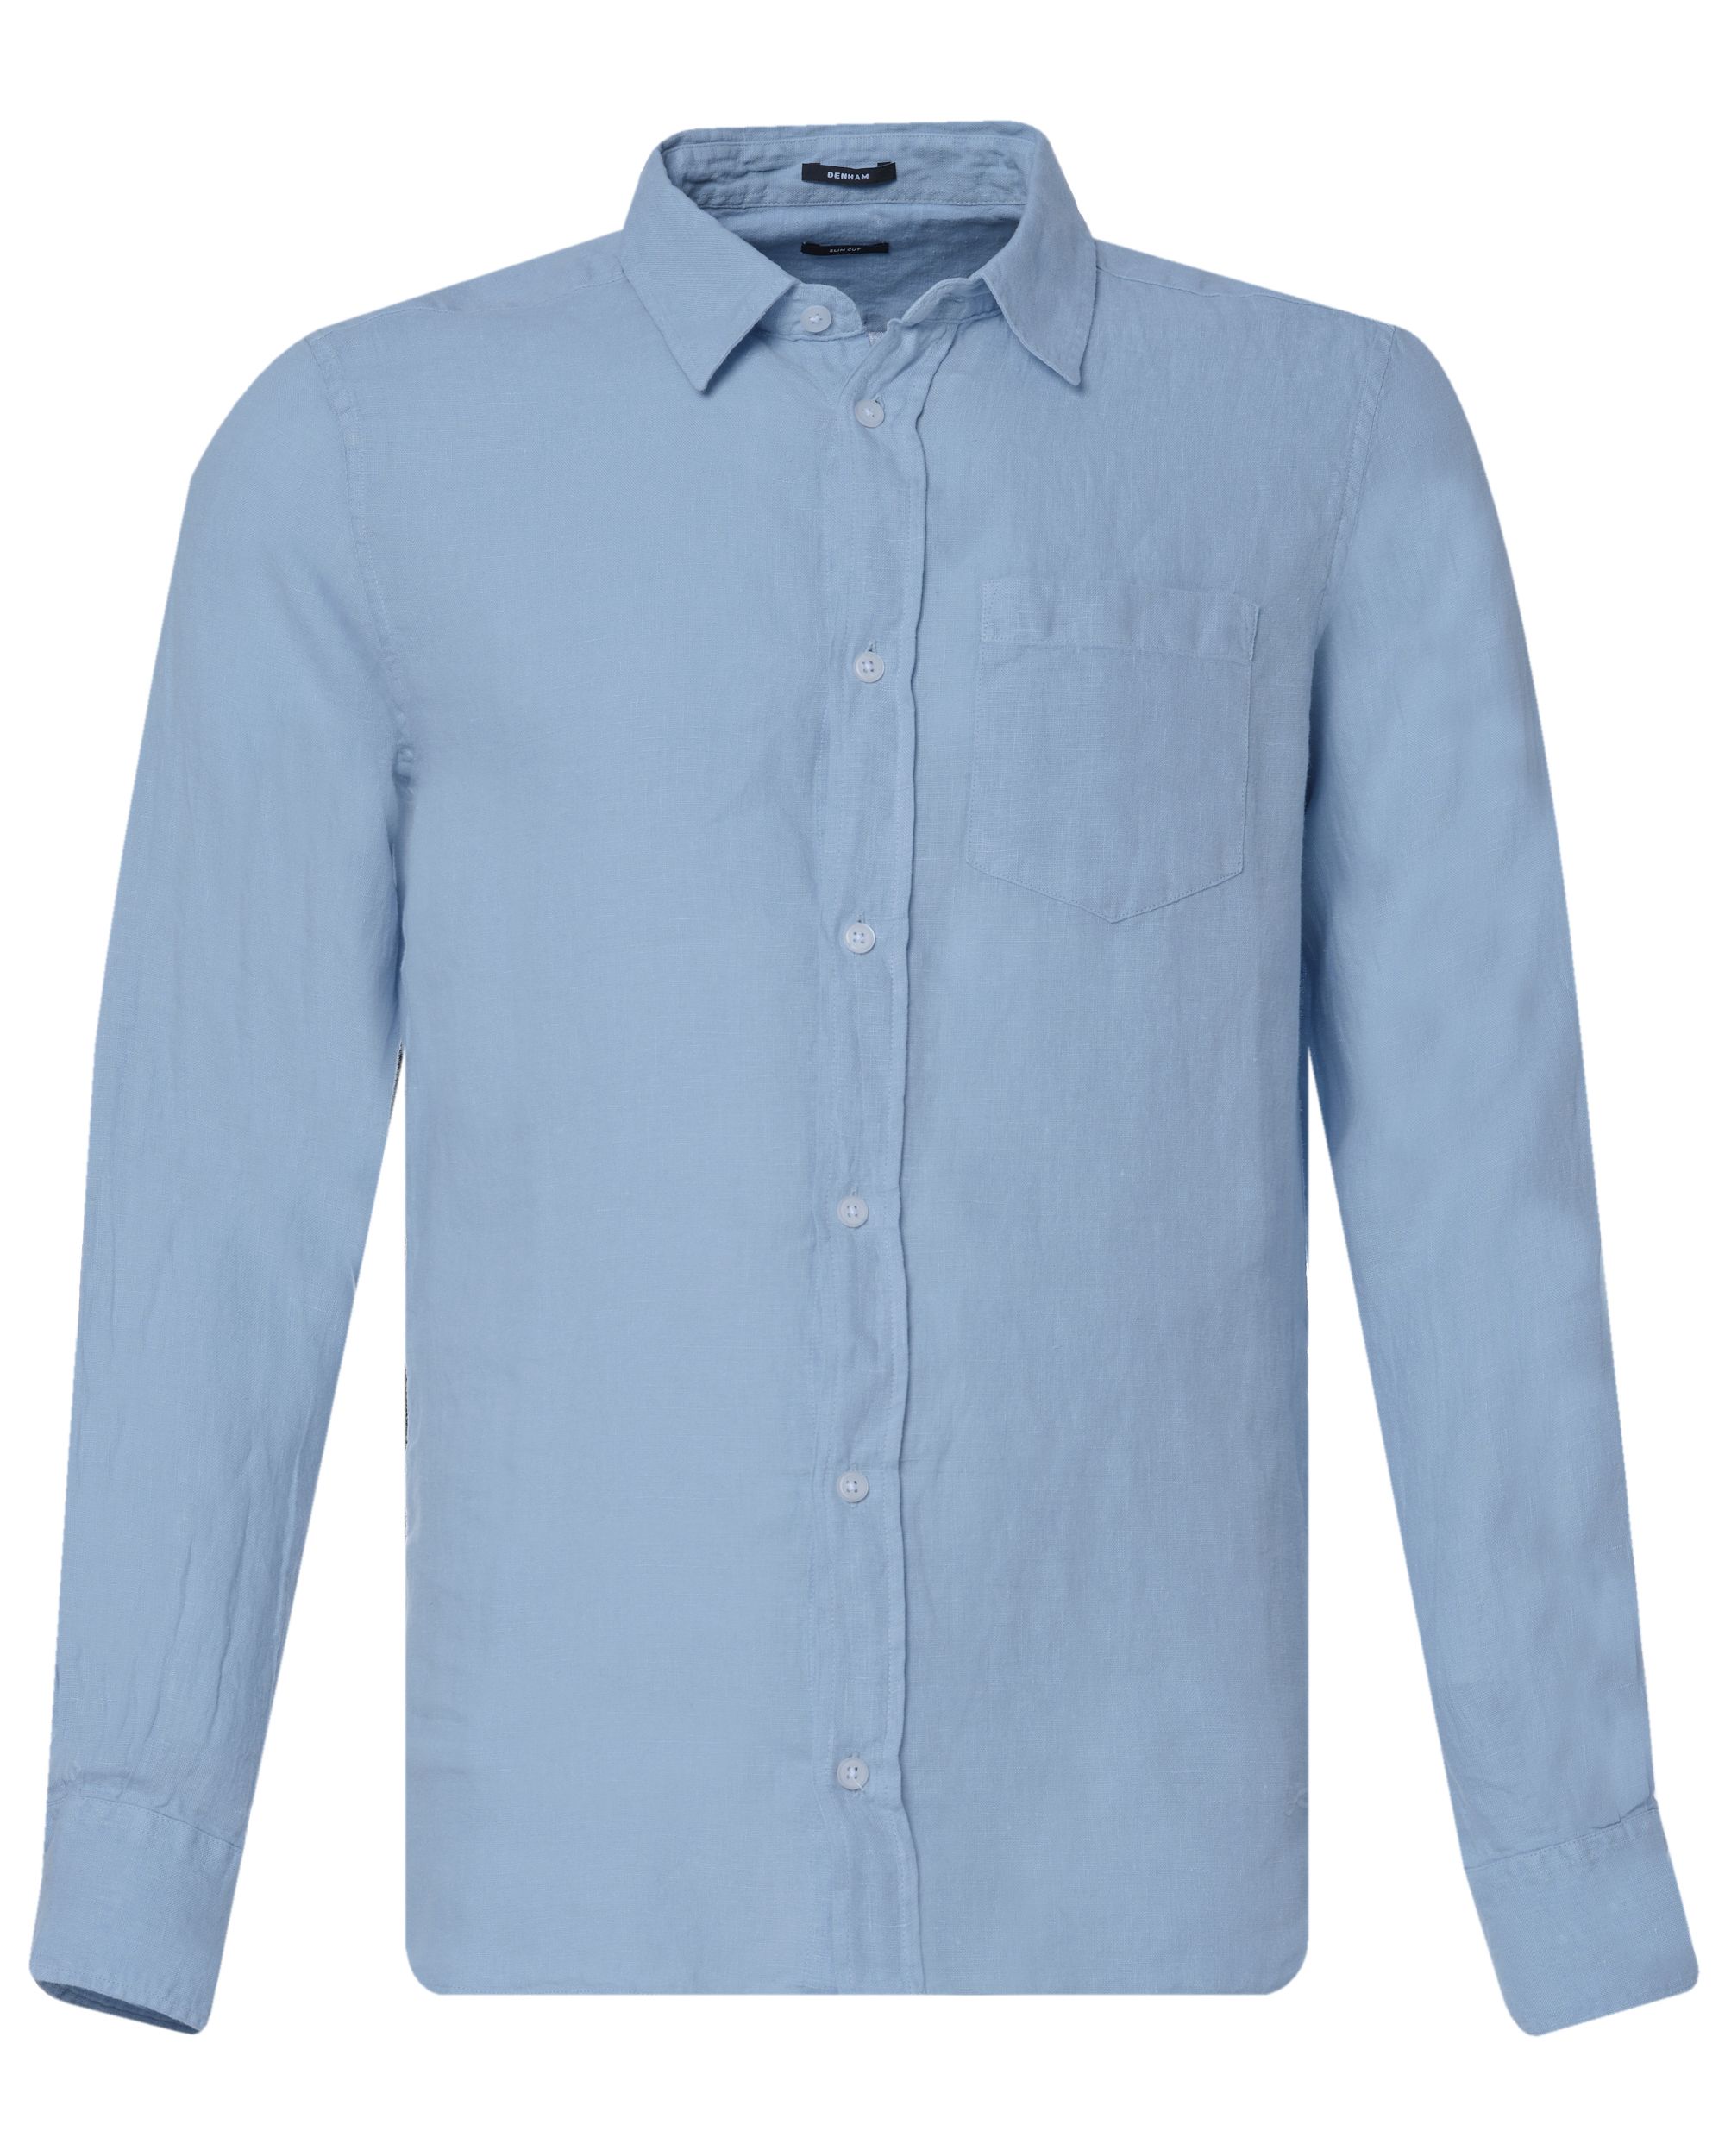 DENHAM Harrison Casual Overhemd LM Blauw 080094-001-L